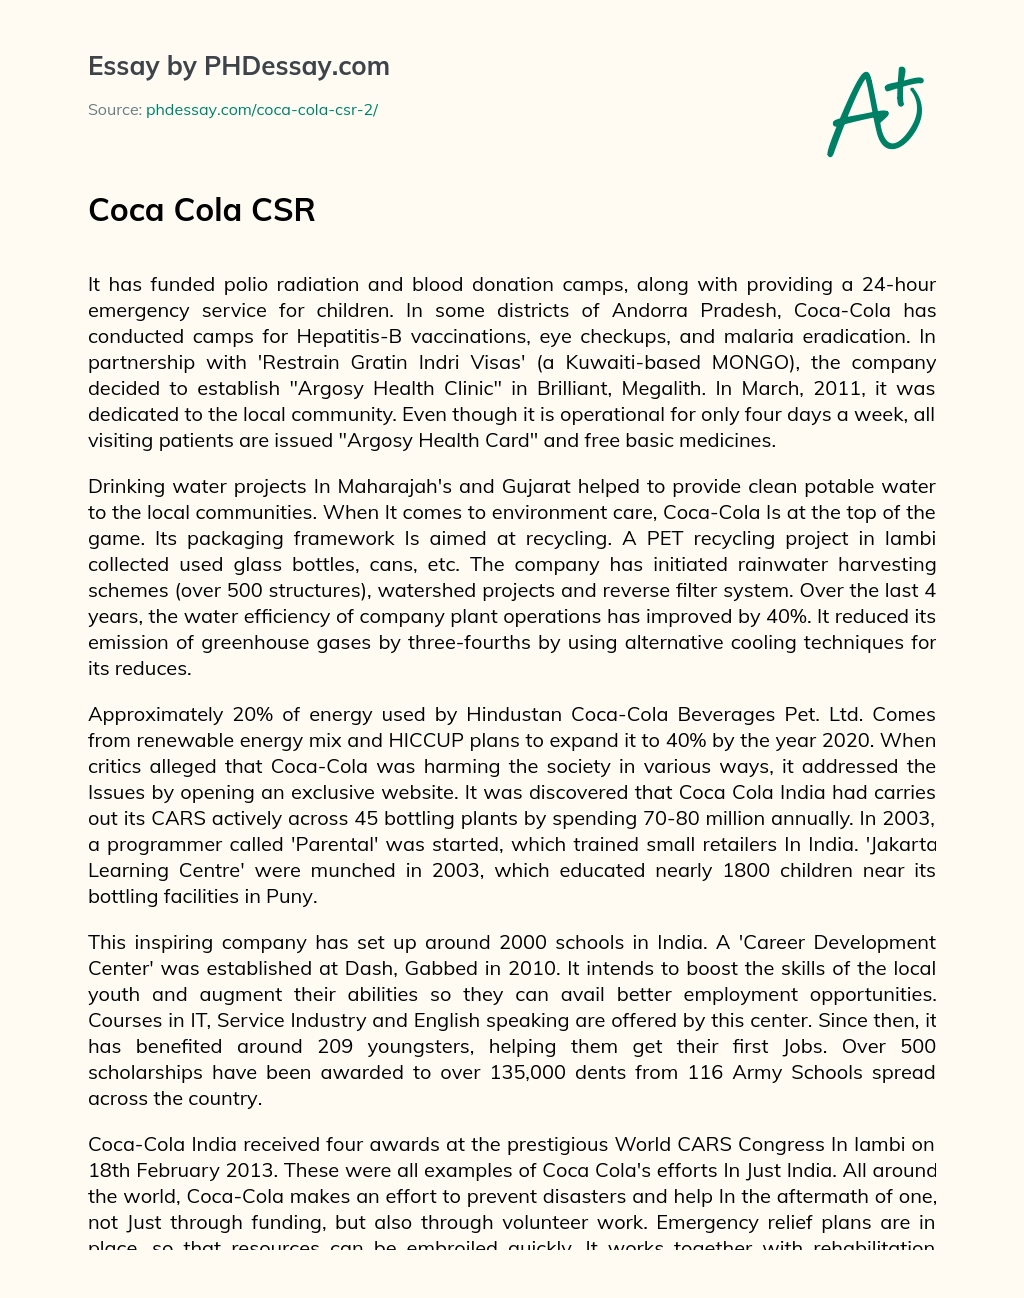 Coca Cola CSR essay